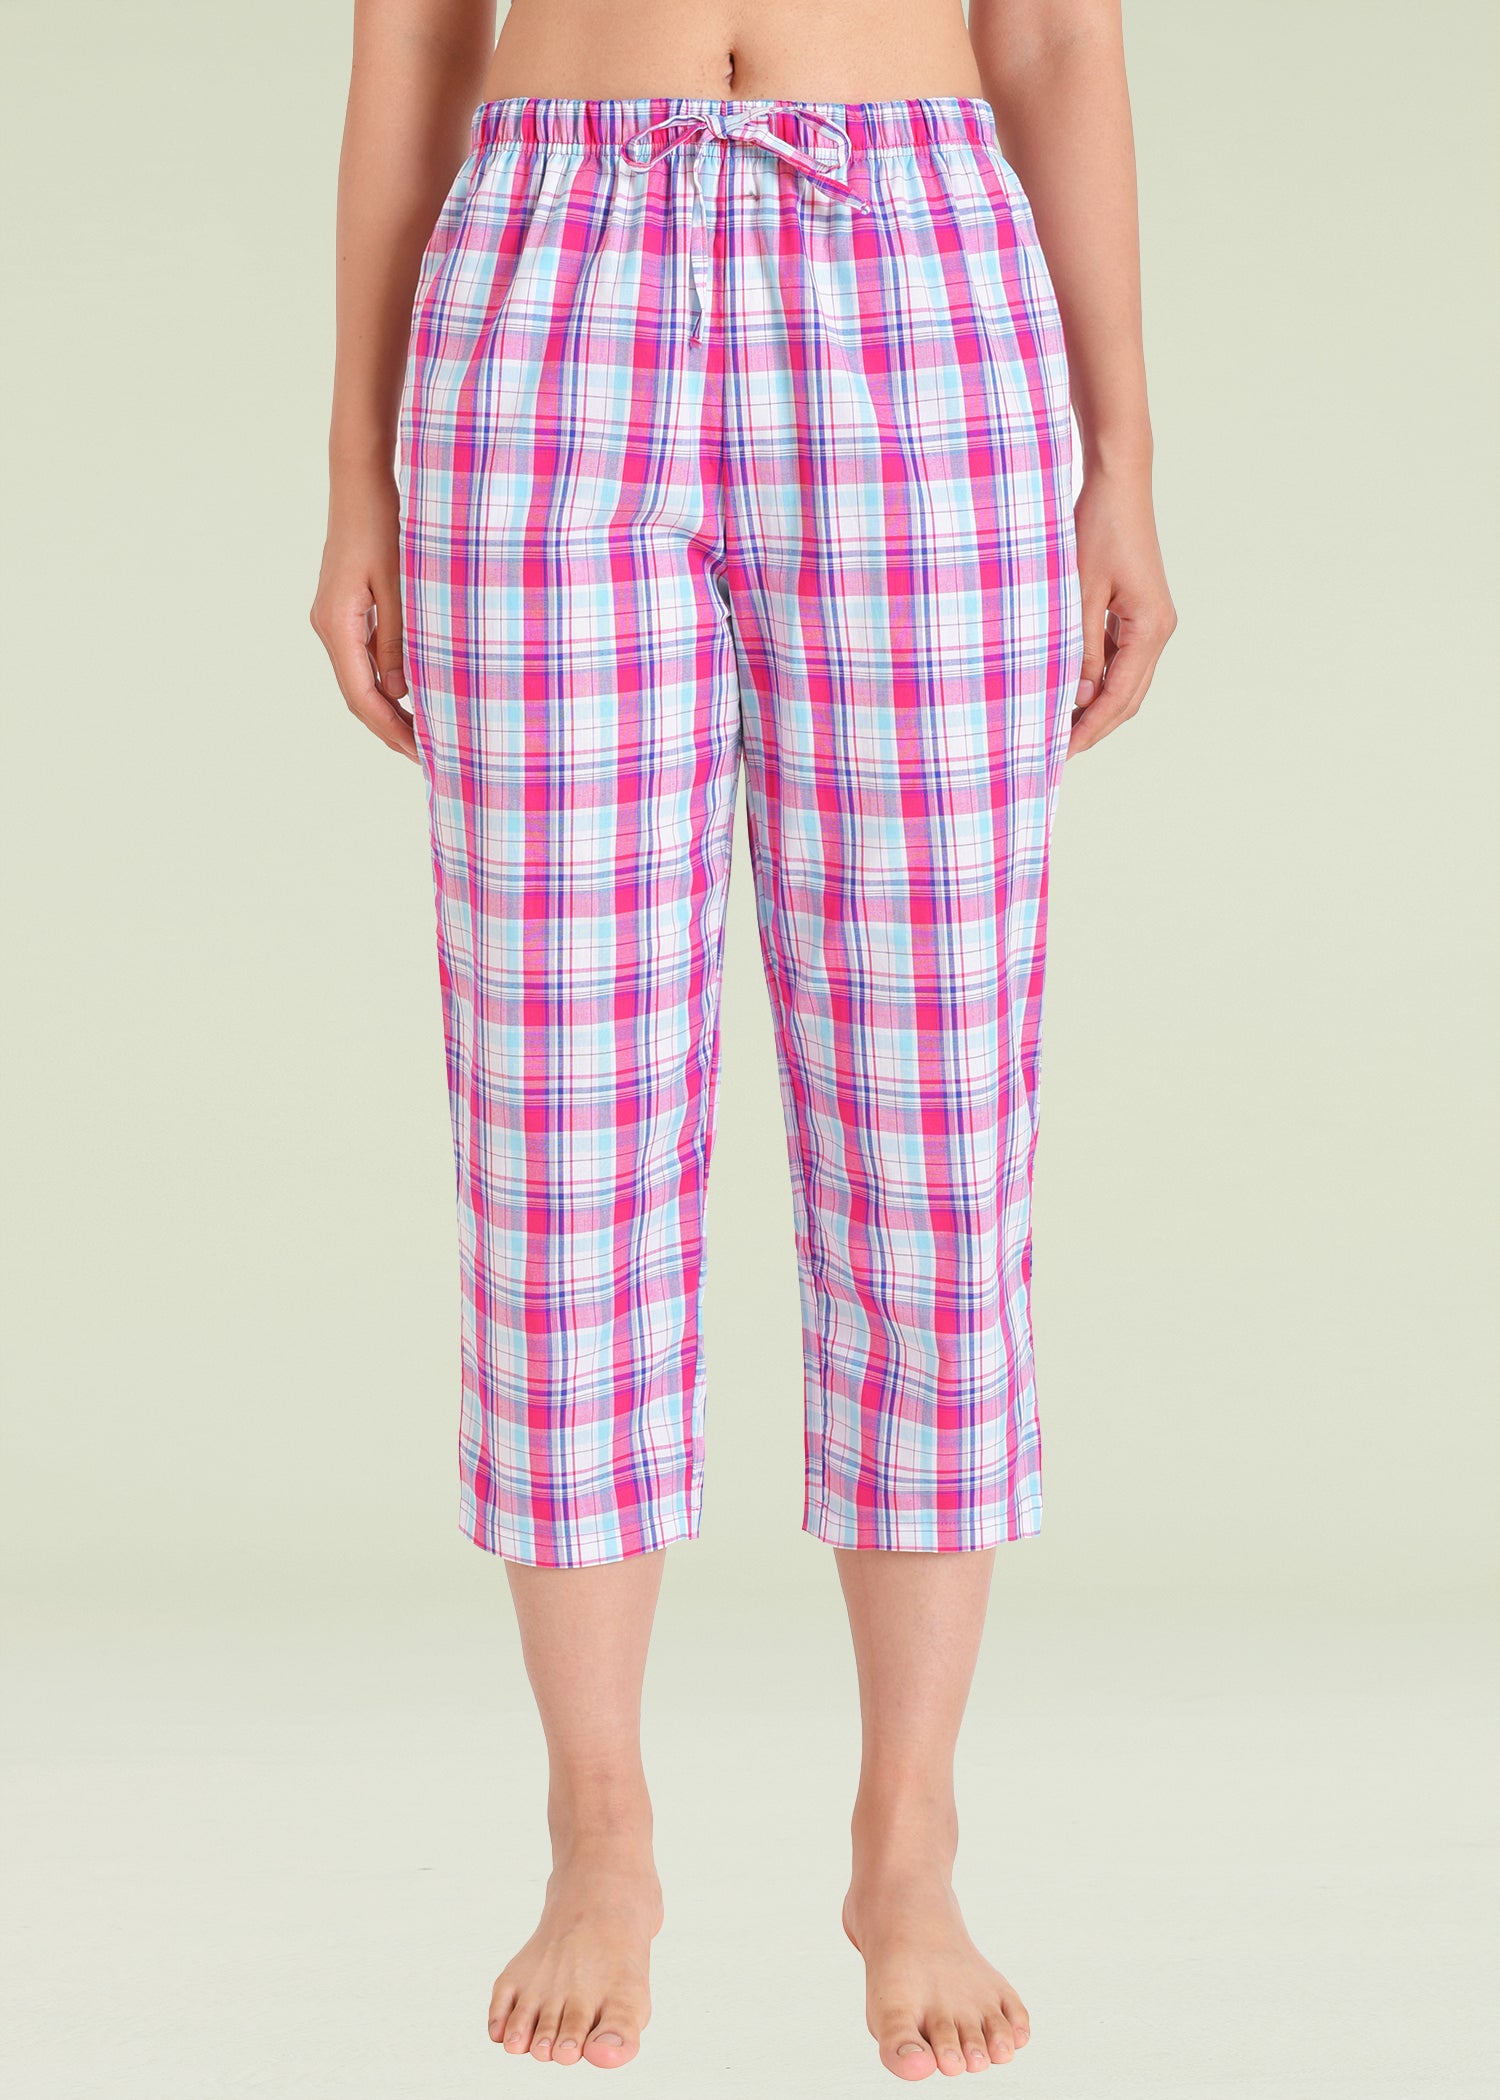 Misscoo Pyjama Bottoms Women's Capri Pajama Pants Lounge Causal